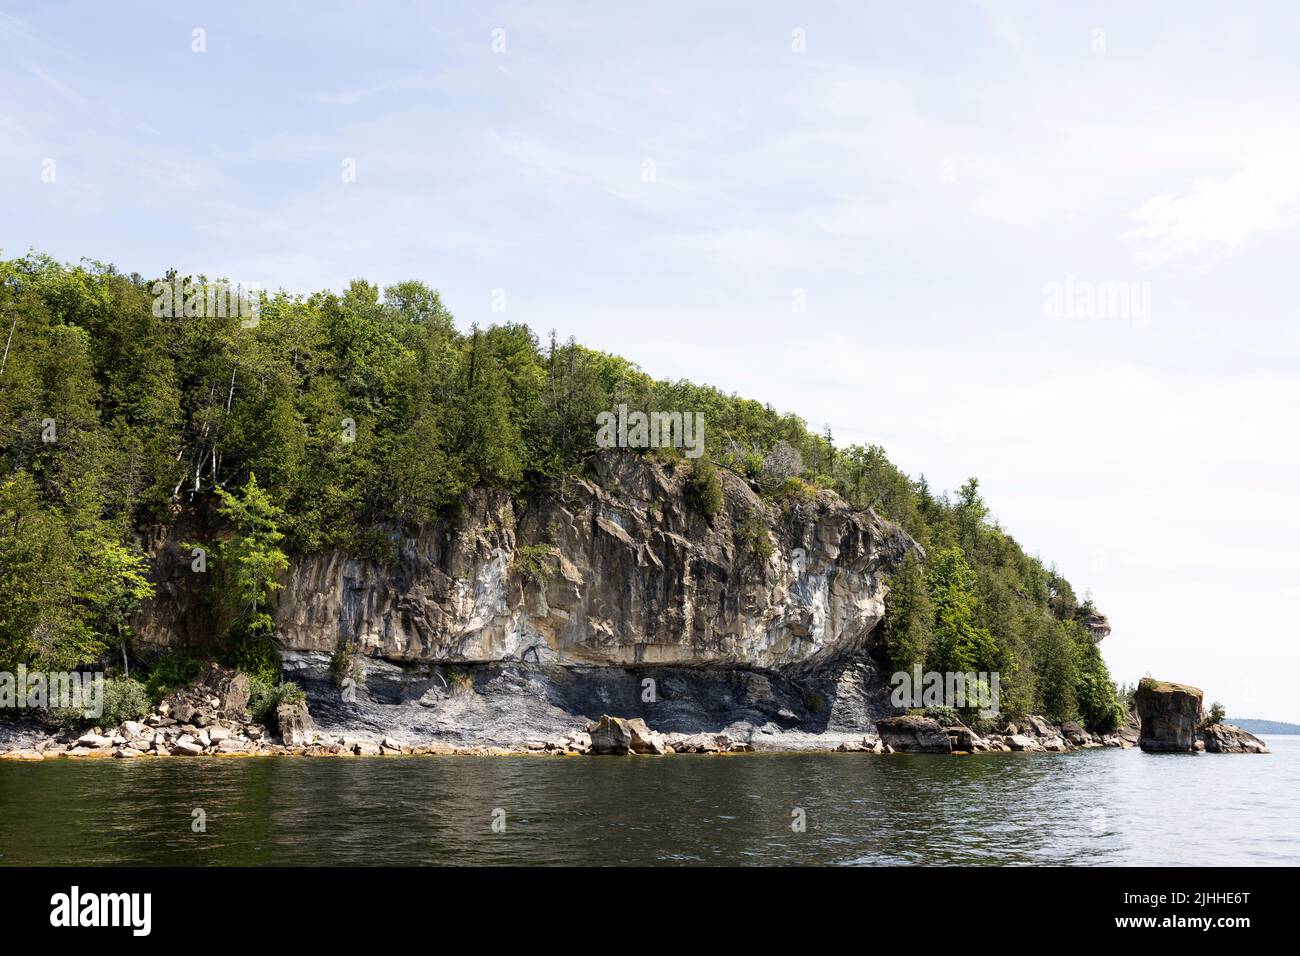 The Champlain thurst fault on Lone Rock Point on Lake Champlain in Burlington, Vermont, USA. Stock Photo